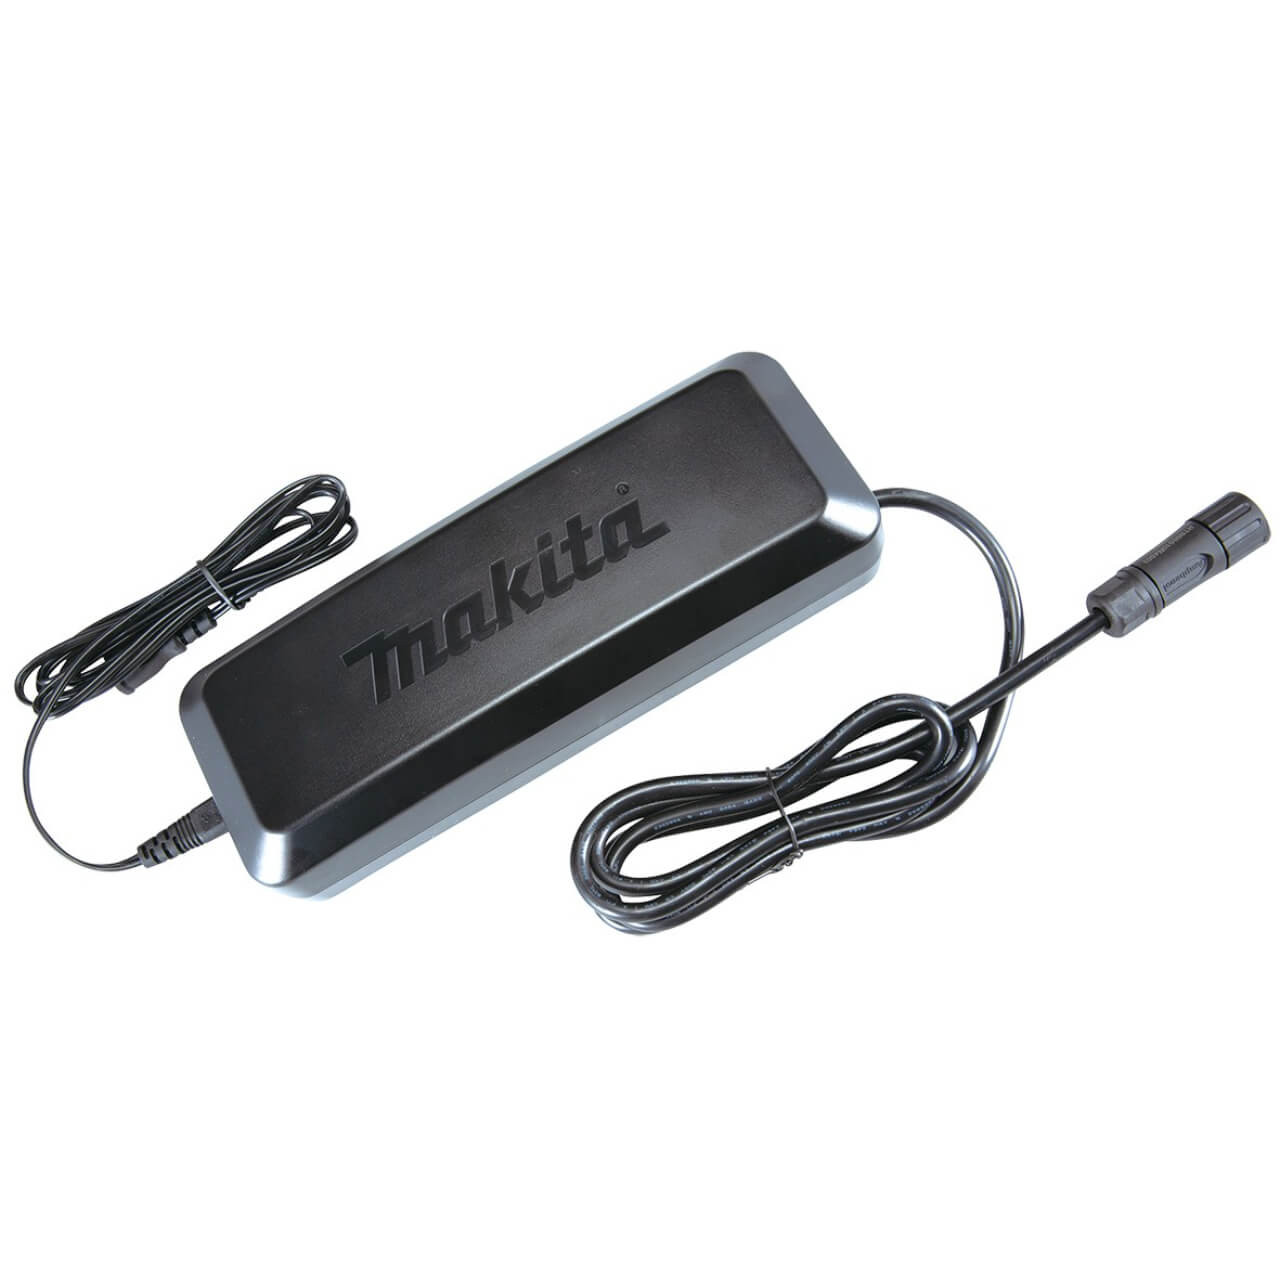 Makita 33.5Ah Portable Power Supply Kit - Includes: Charger & 40V Max XGT Battery Adaptor